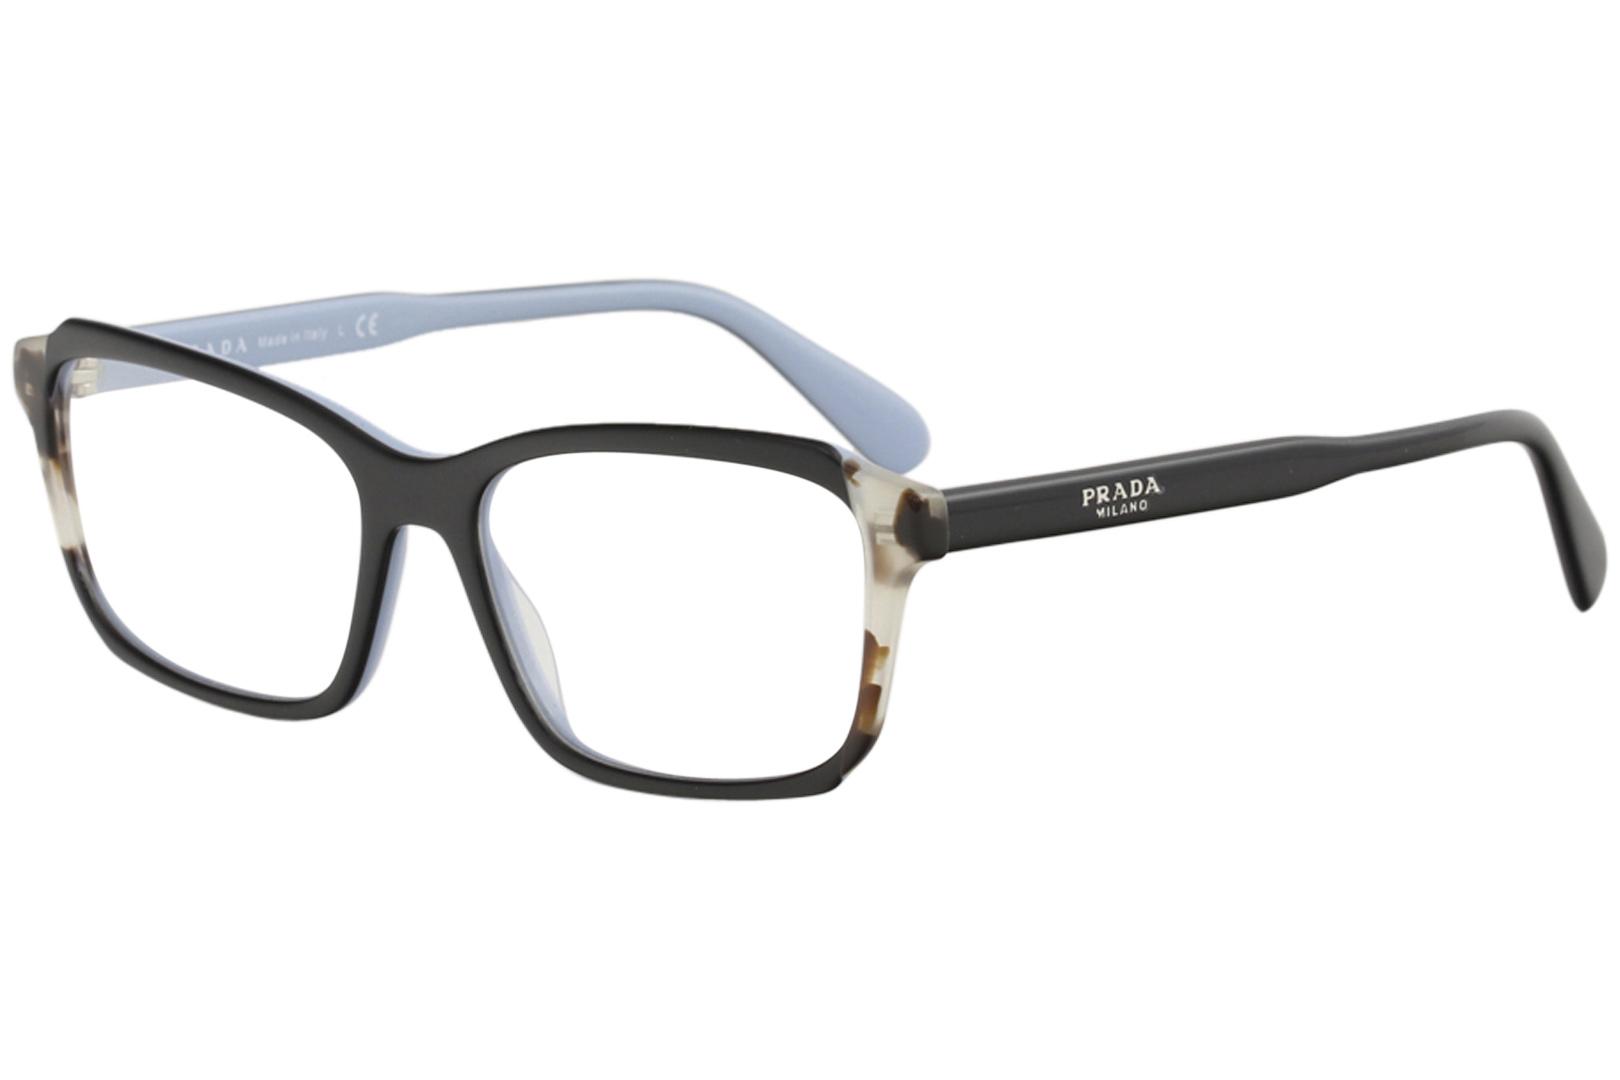 Prada Women's Eyeglasses VPR01V VPR/01 